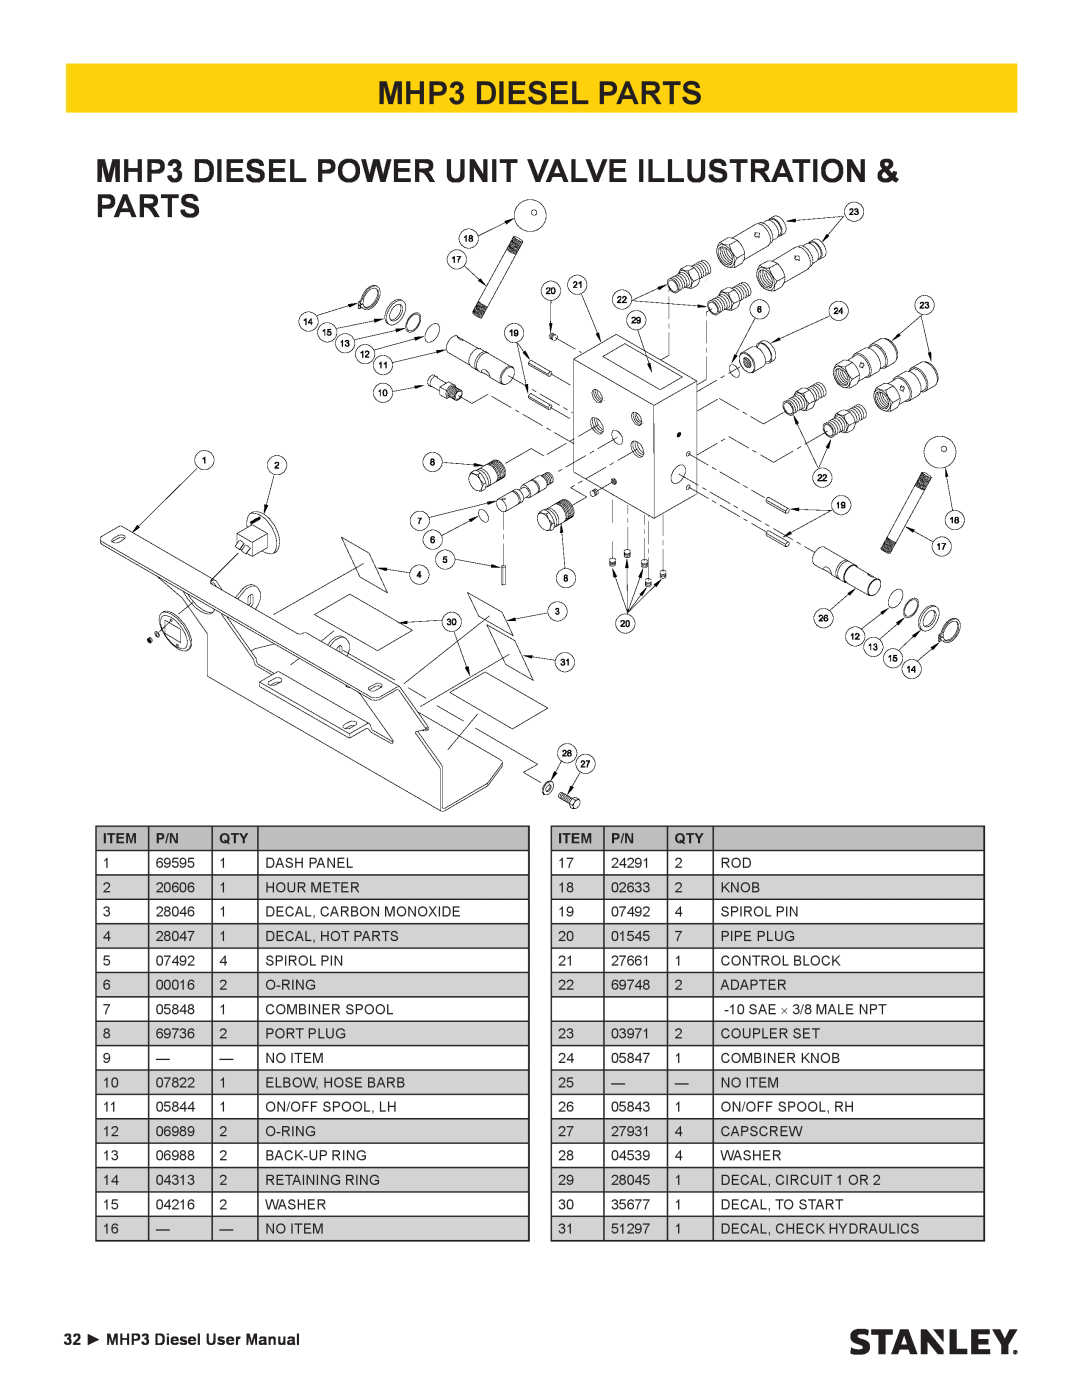 Stanley Black & Decker manual MHP3 DIESEL PARTS MHP3 DIESEL POWER UNIT VALVE ILLUSTRATION & PARTS 